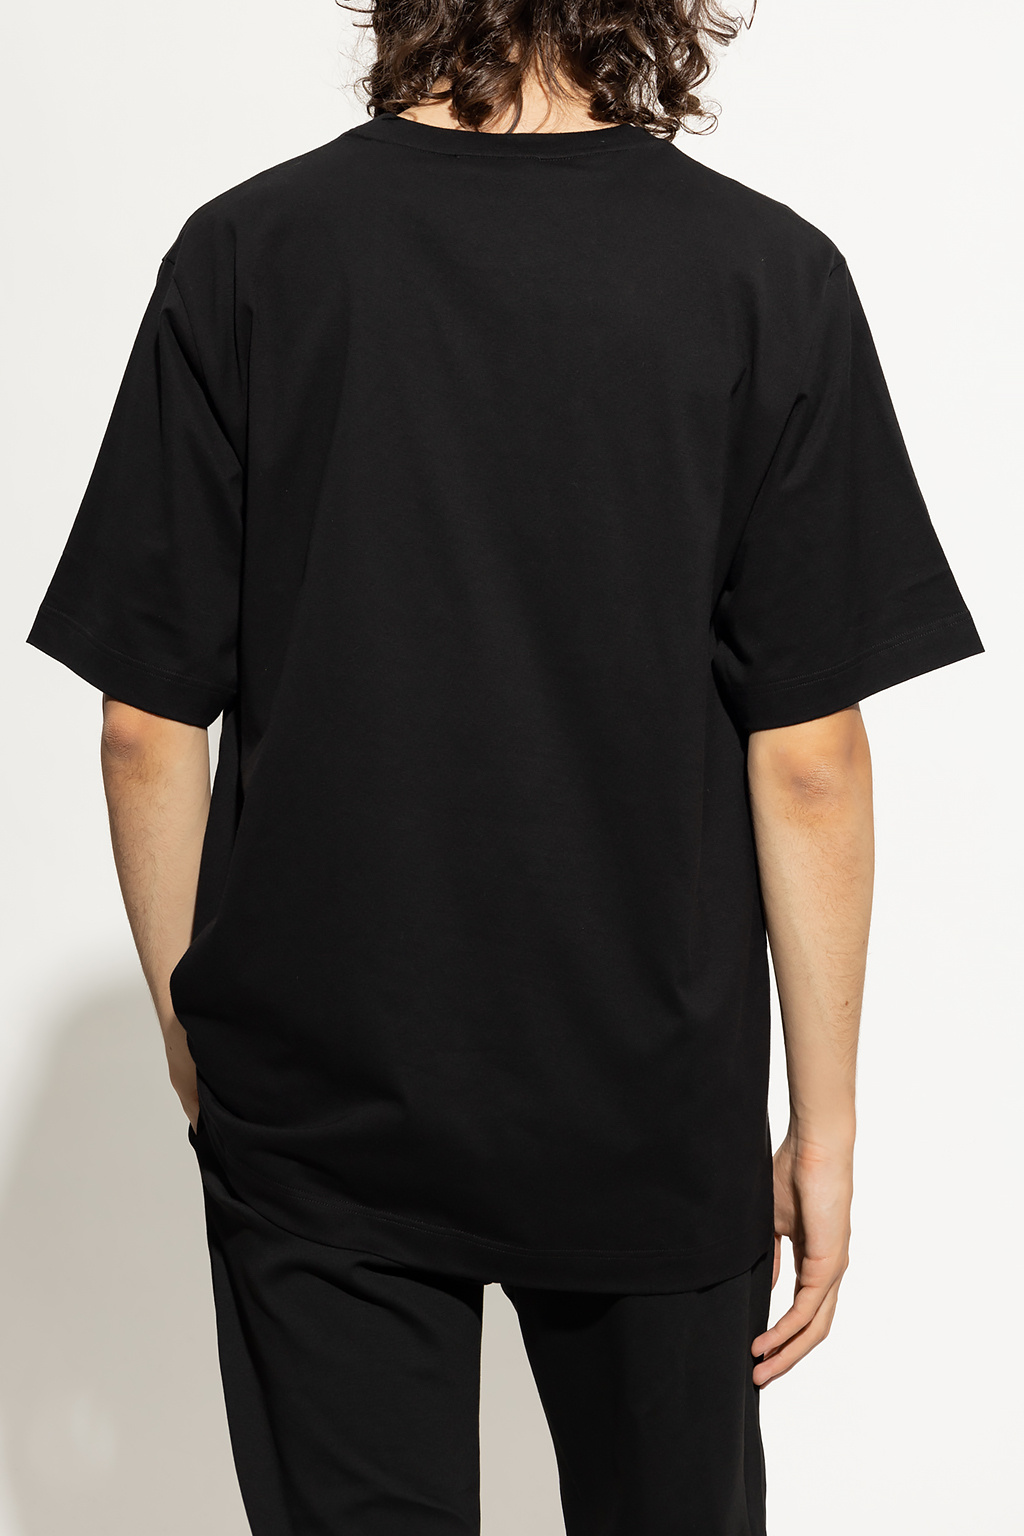 Giuseppe Zanotti T-shirt with logo | Men's Clothing | Vitkac